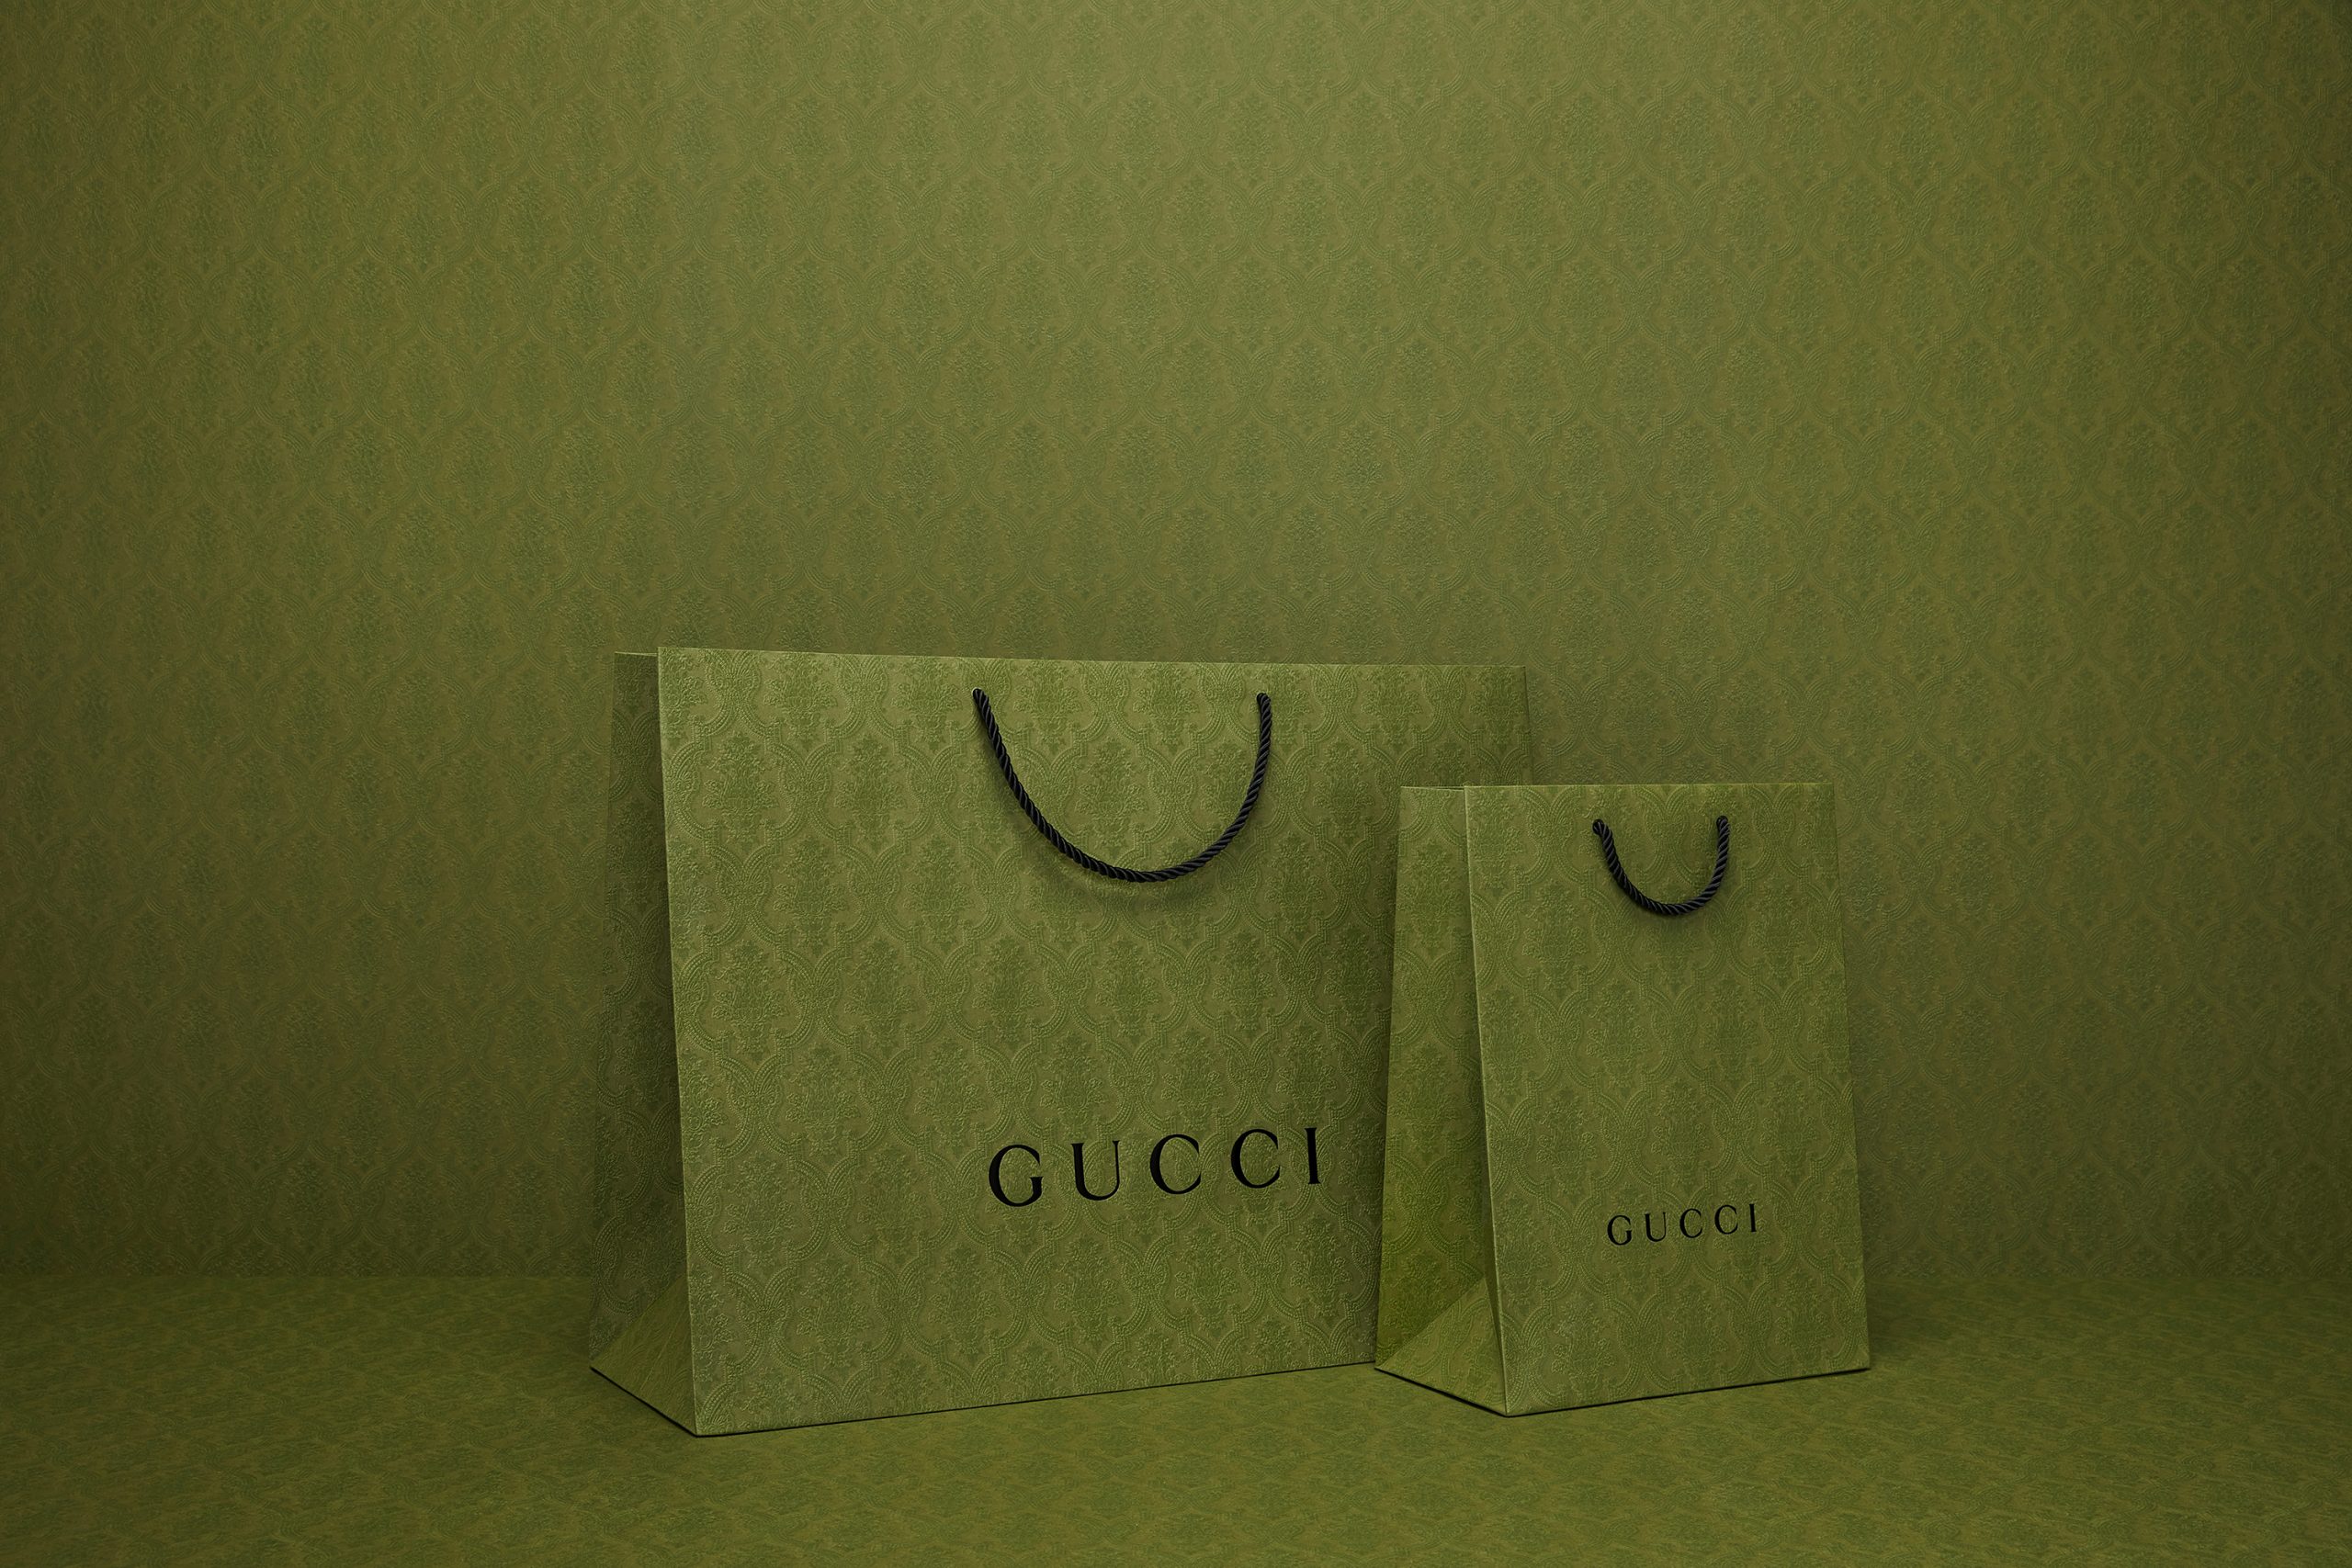 gucci shopping paper bag